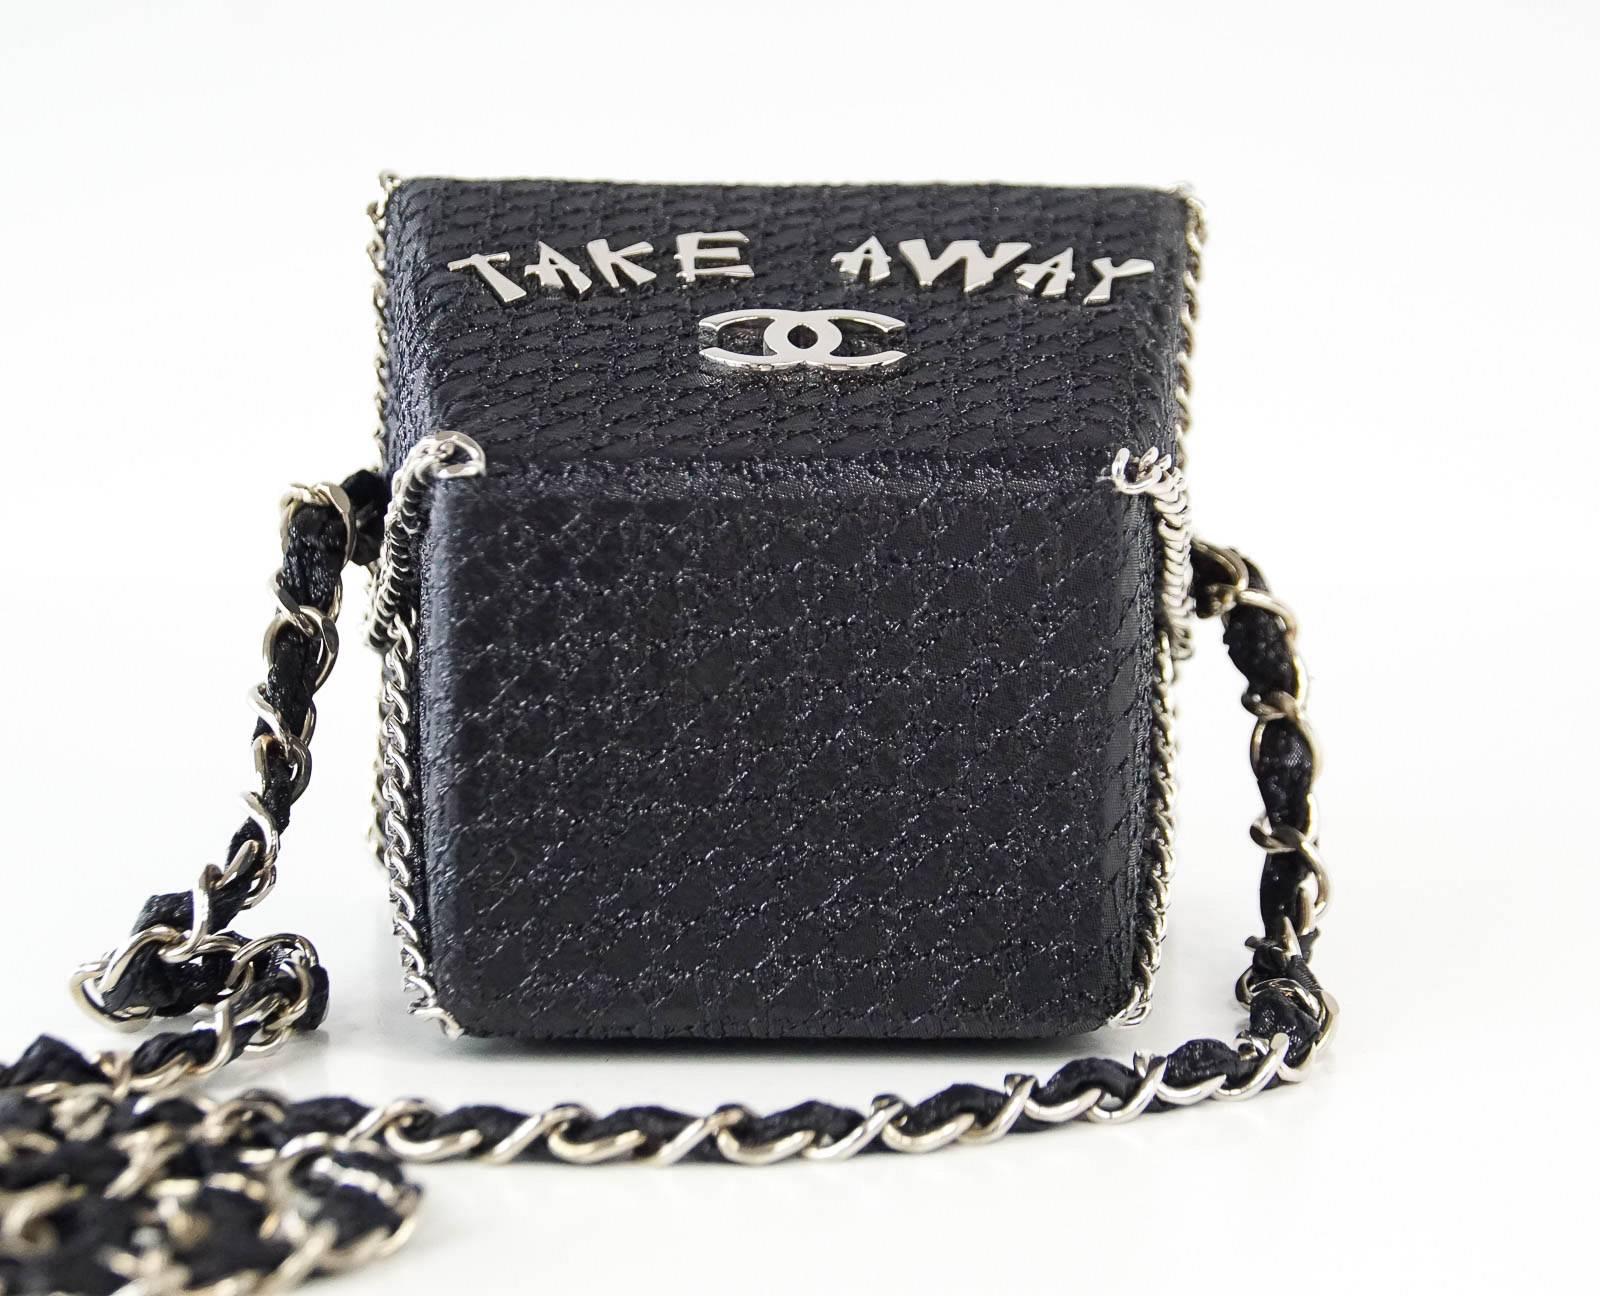 Black Chanel Take Away Box Bag Rare Limited Edition Runway Shanghai Collection